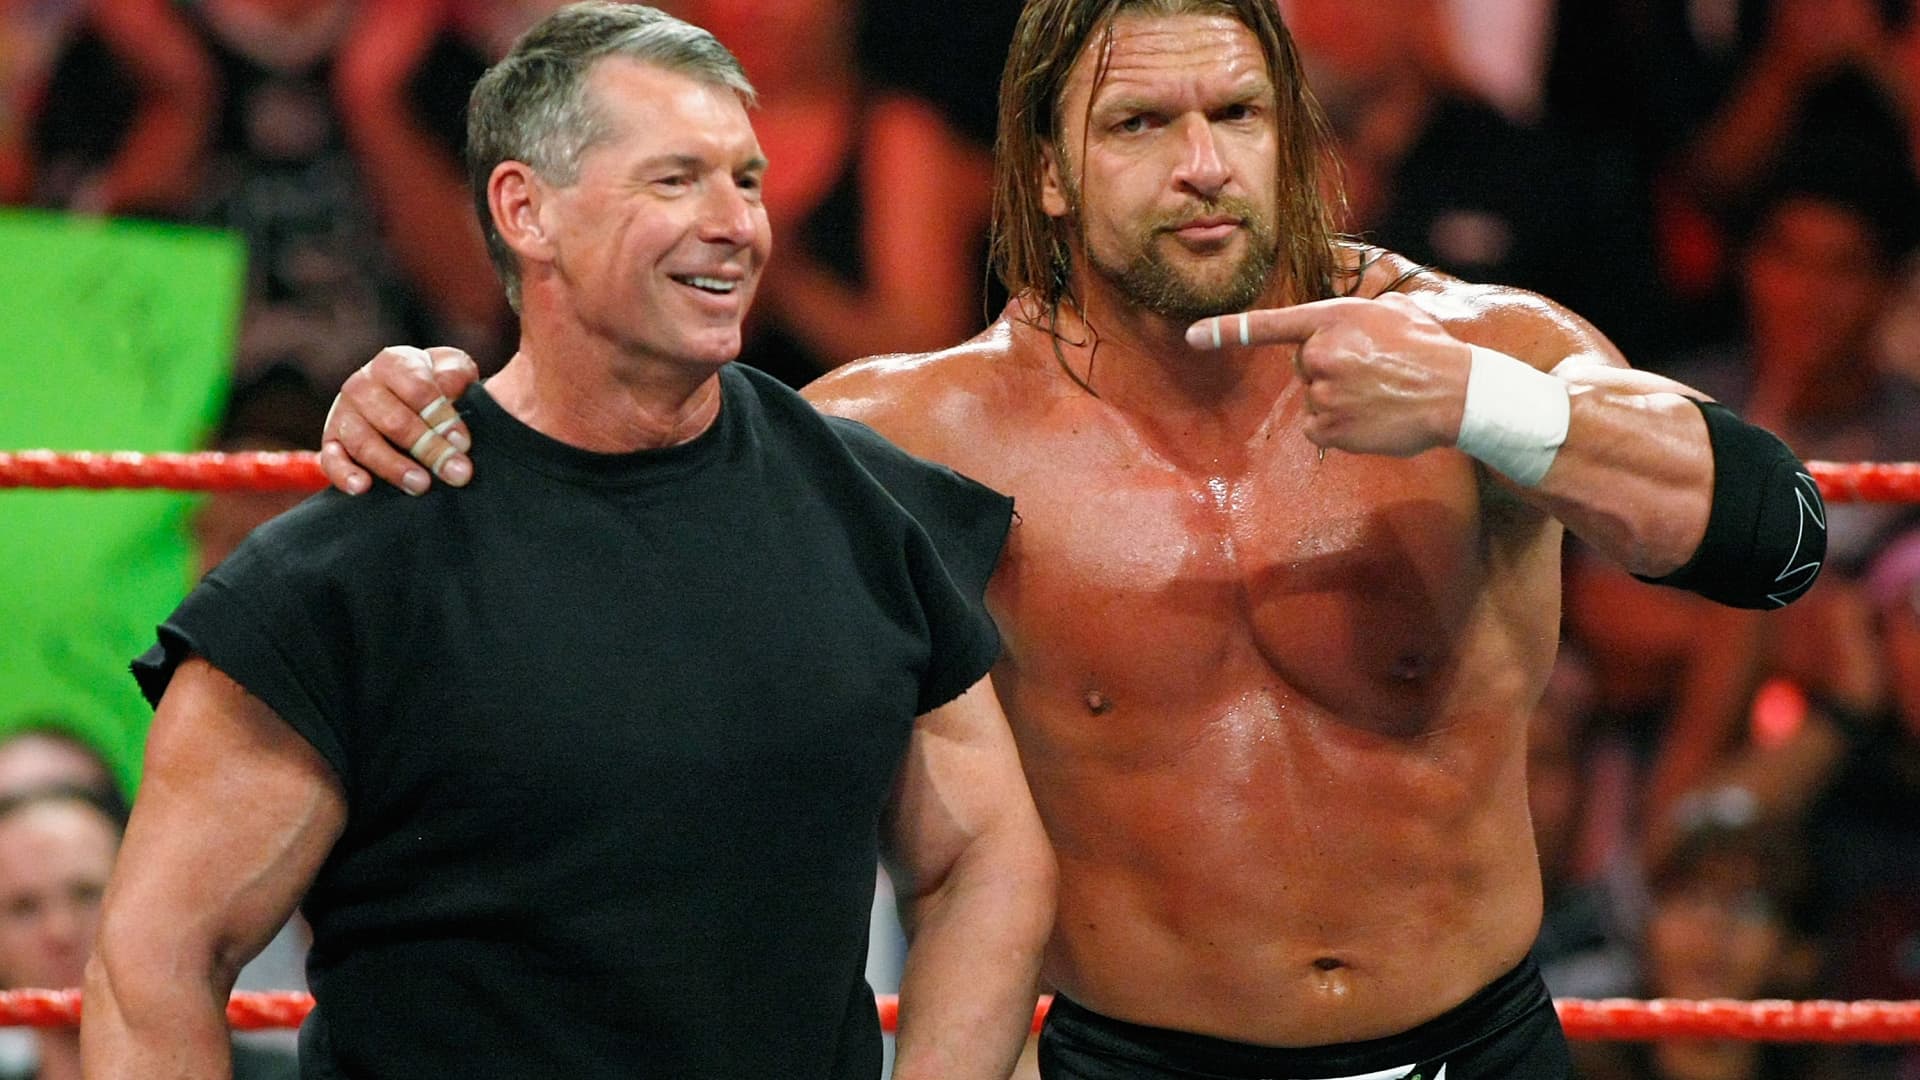 Vince McMahon scandals, retirement heighten WWE sale speculation